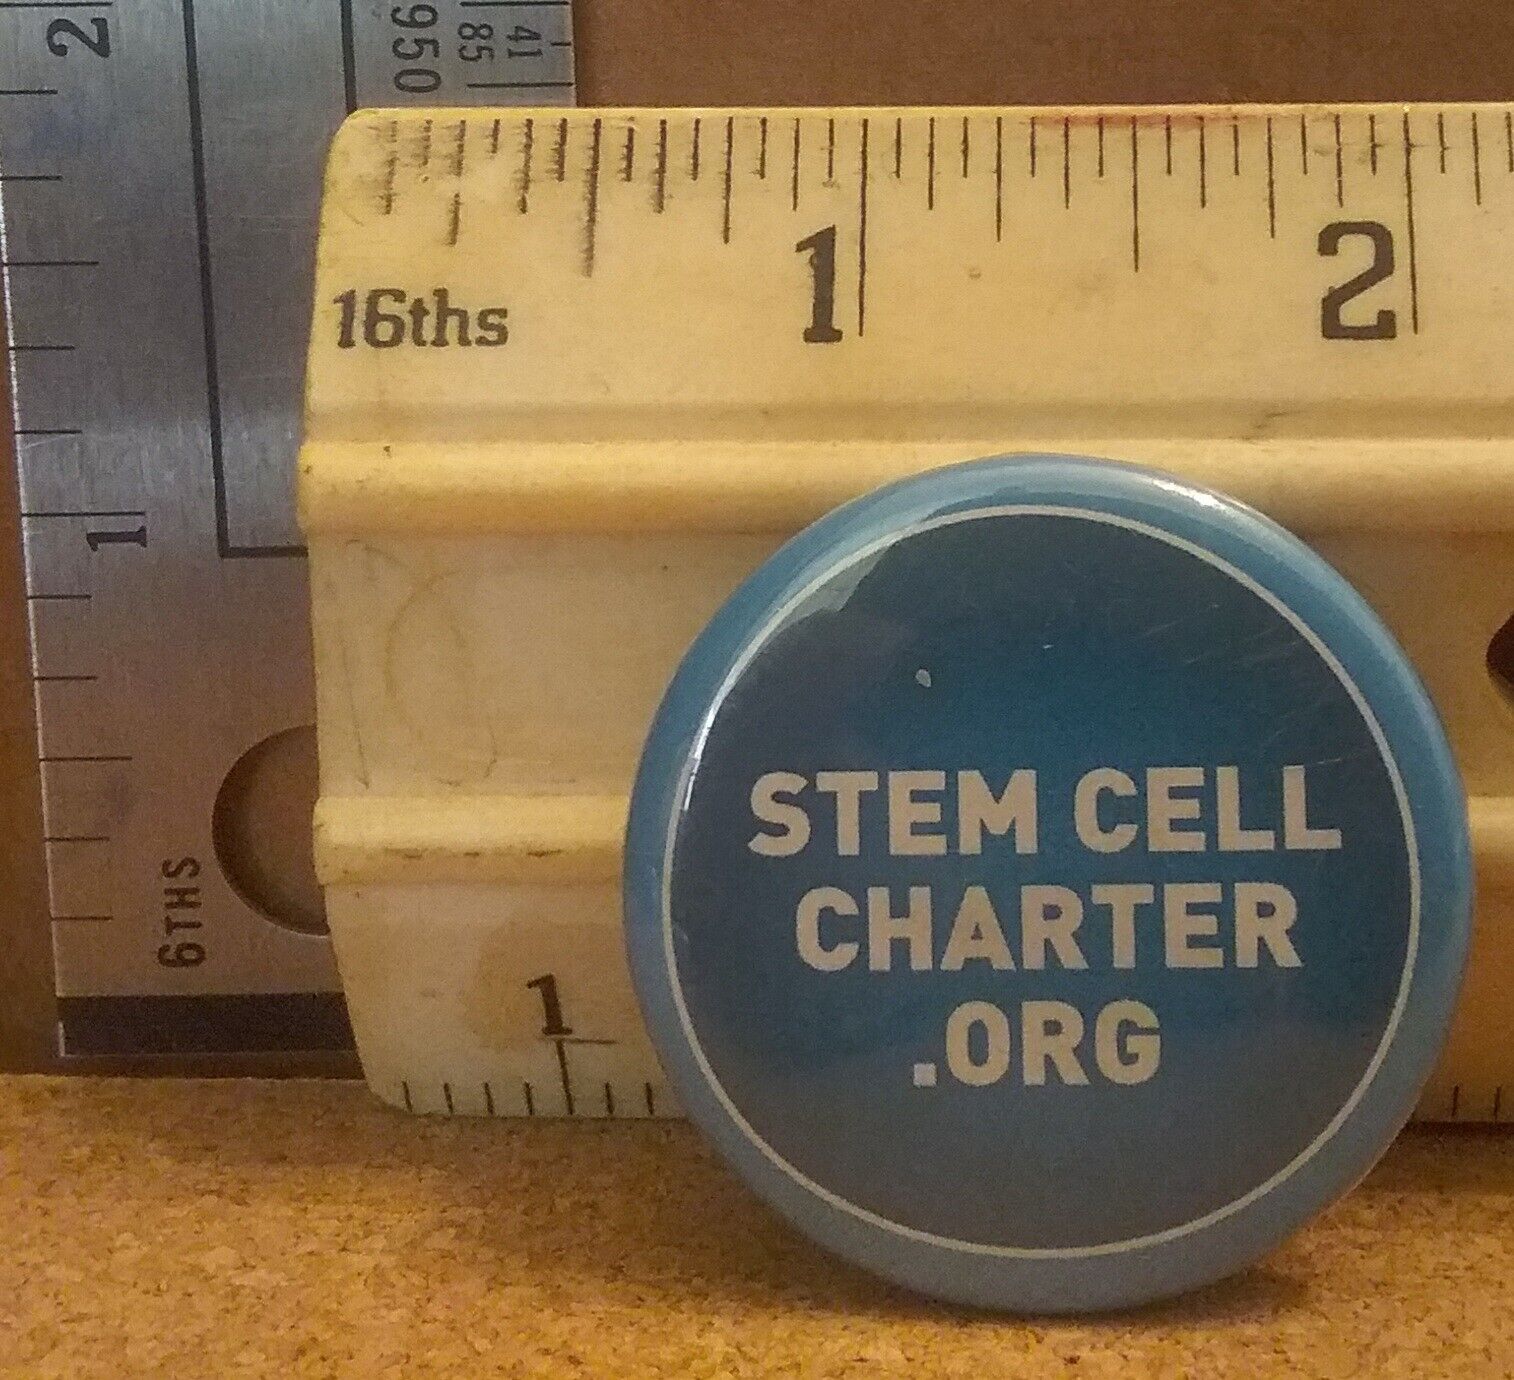 Stem Cell Charter. Org - Regenerative Medicine -Future Medicine - Button Pinback